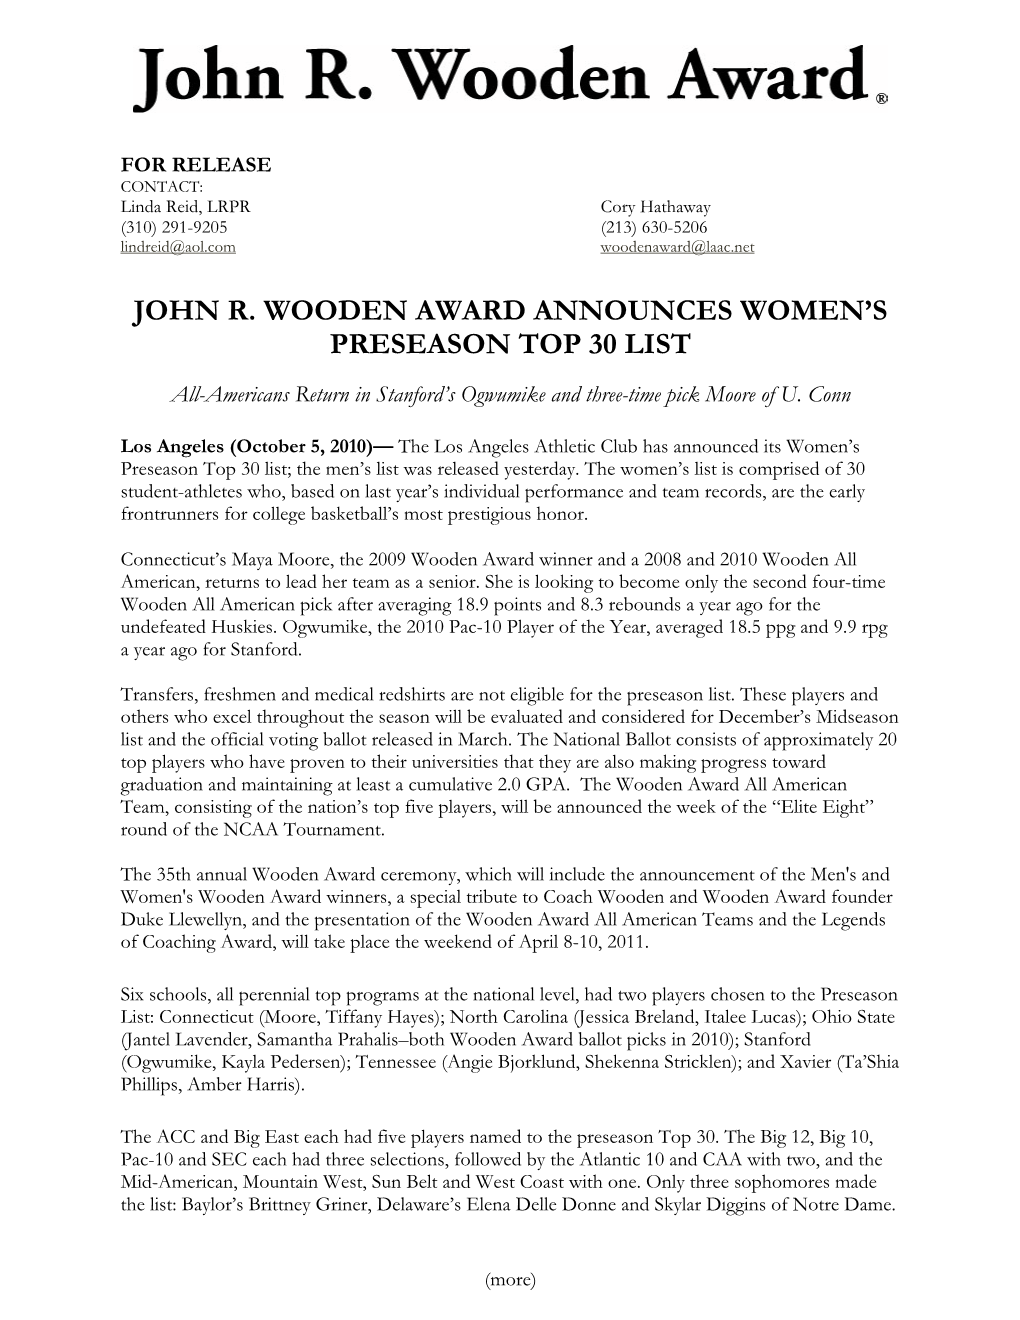 John R. Wooden Award Announces Women's